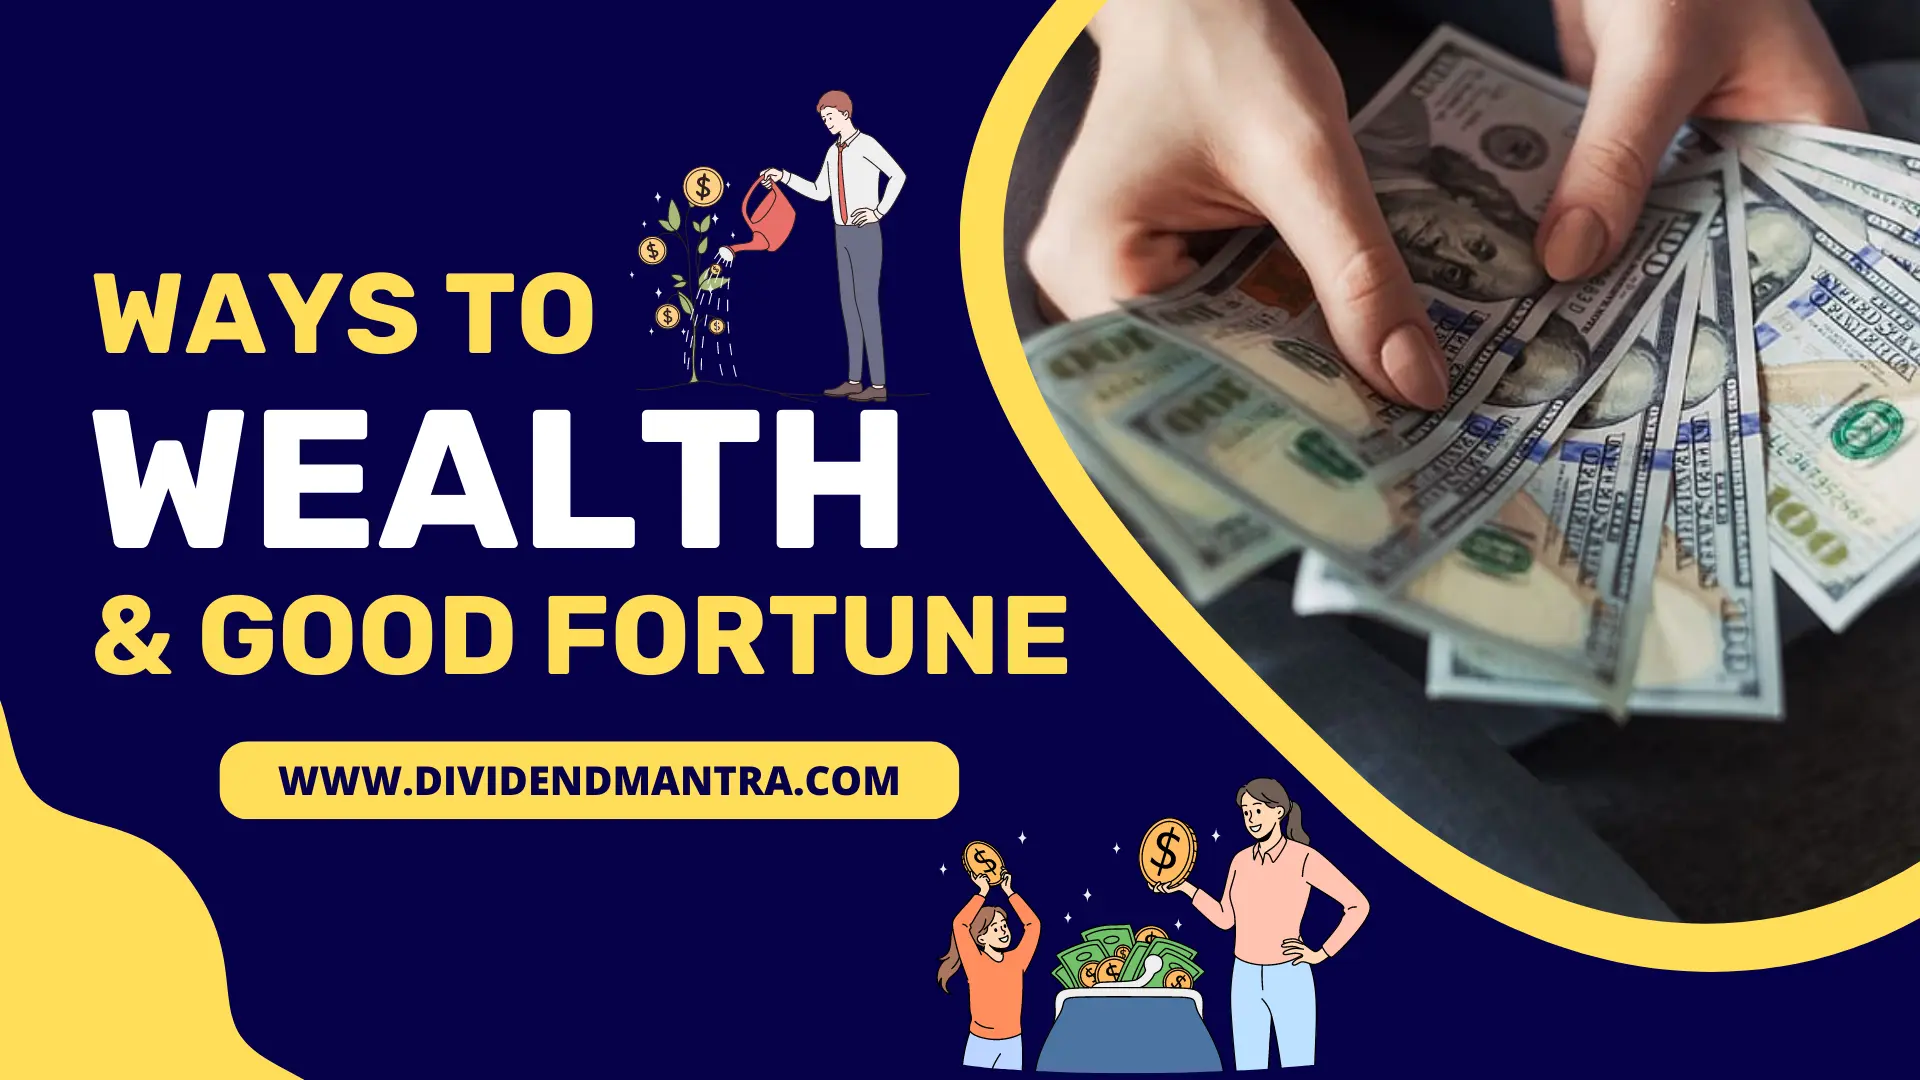 Ways to Wealth & Good Fortune